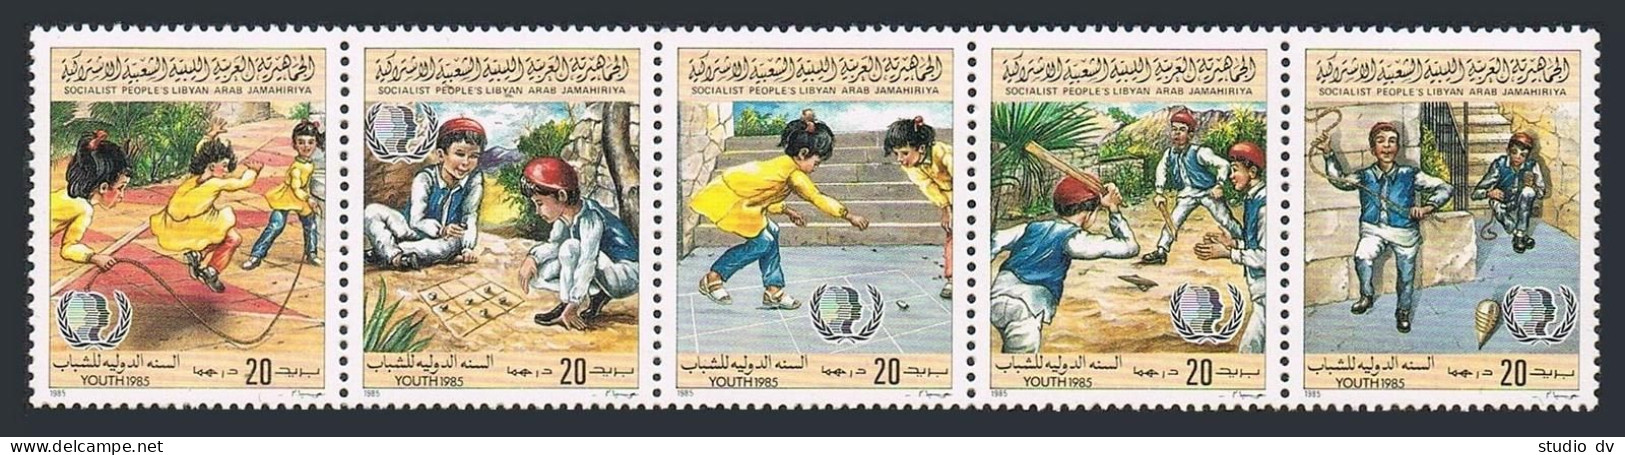 Libya 1260 Ae Strip,MNH.Michel 1520-1524. Youth Year IYY-1985.Children's Games. - Libye